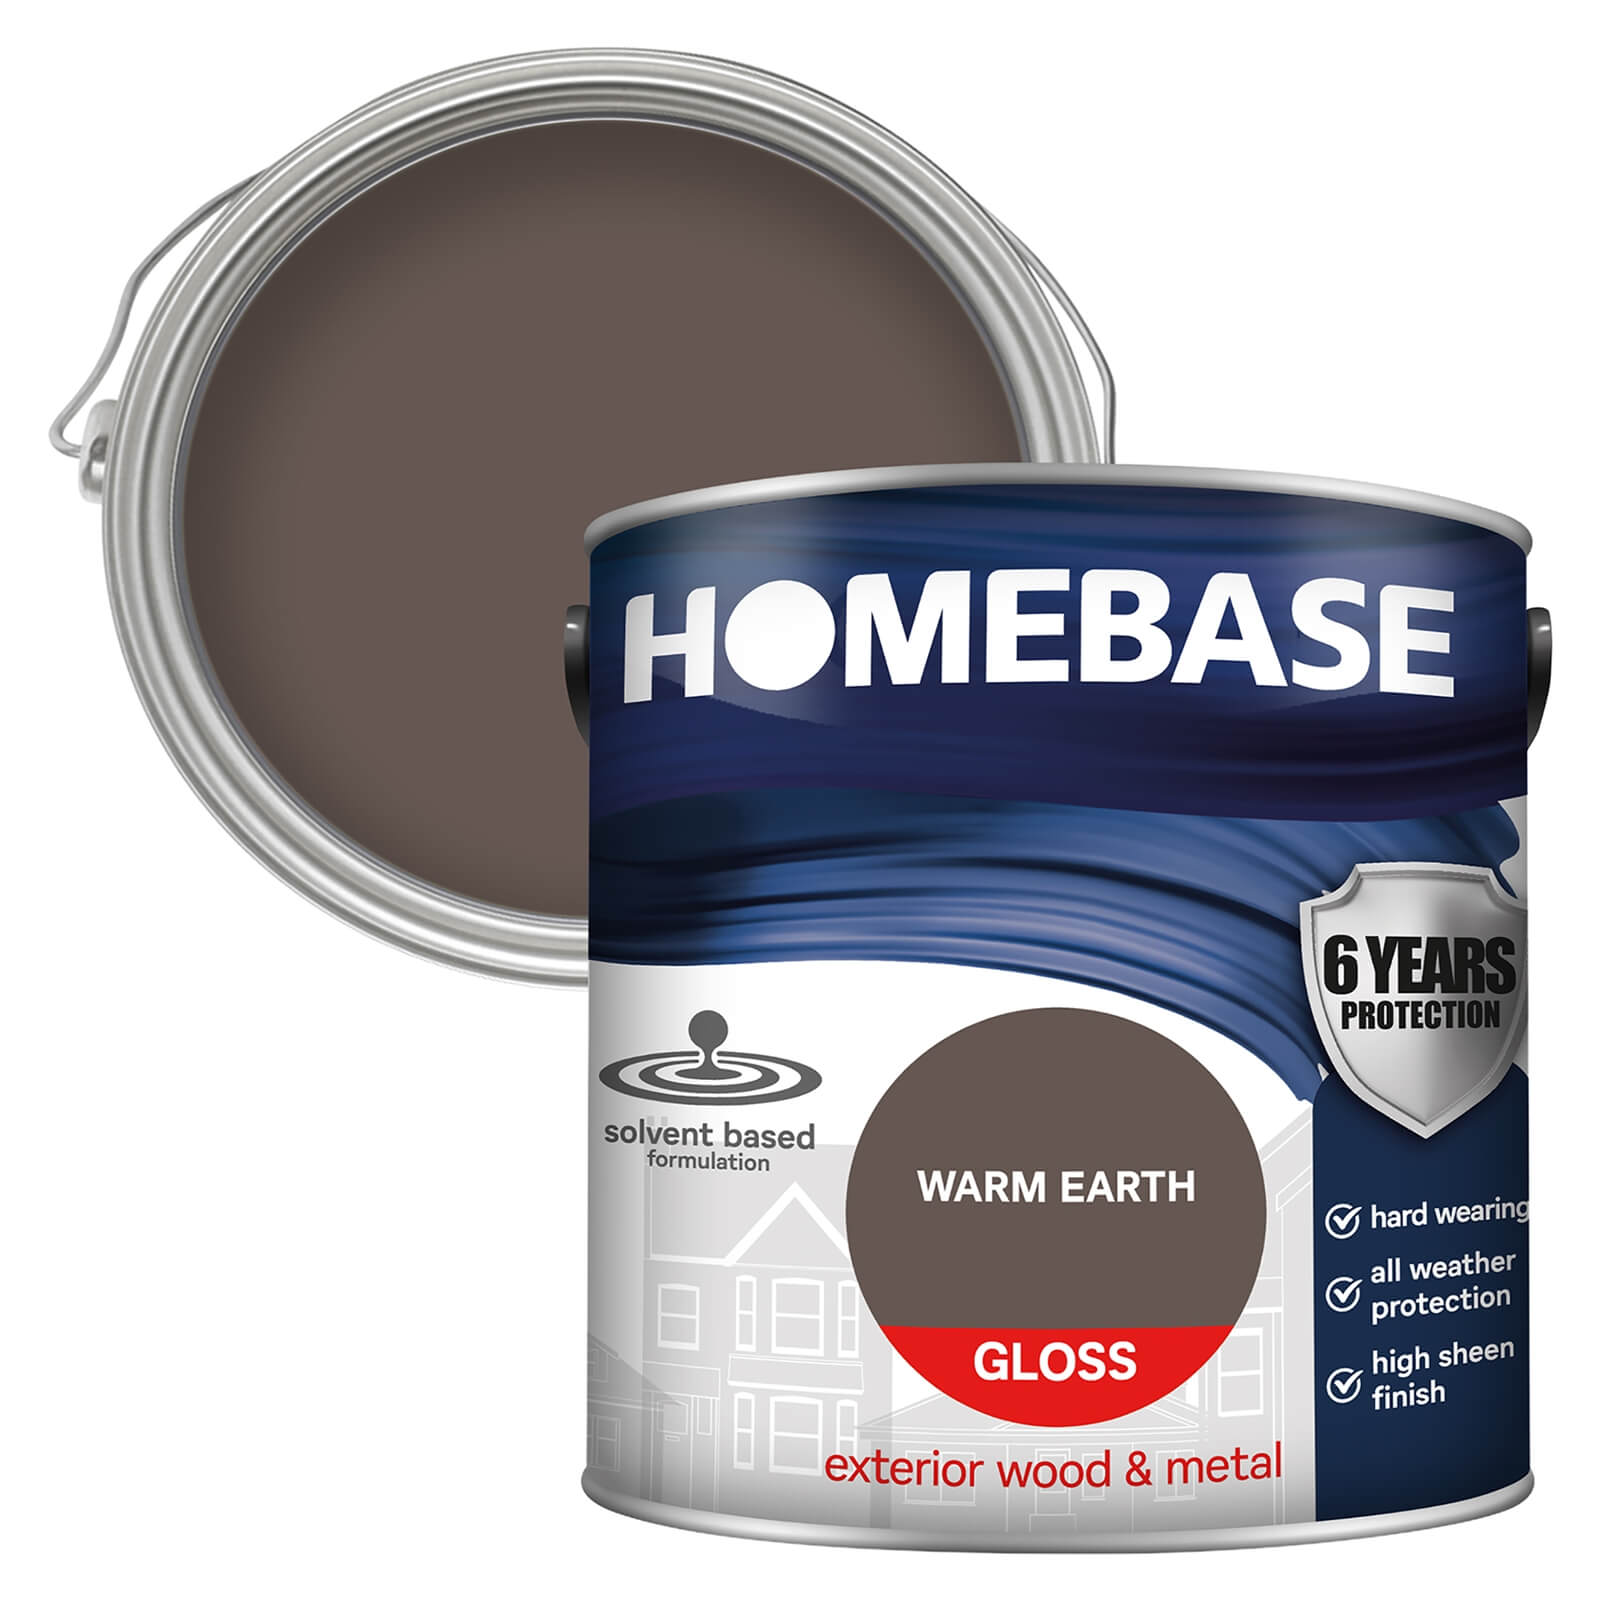 Homebase Exterior Gloss Paint - Warm Earth 2.5L